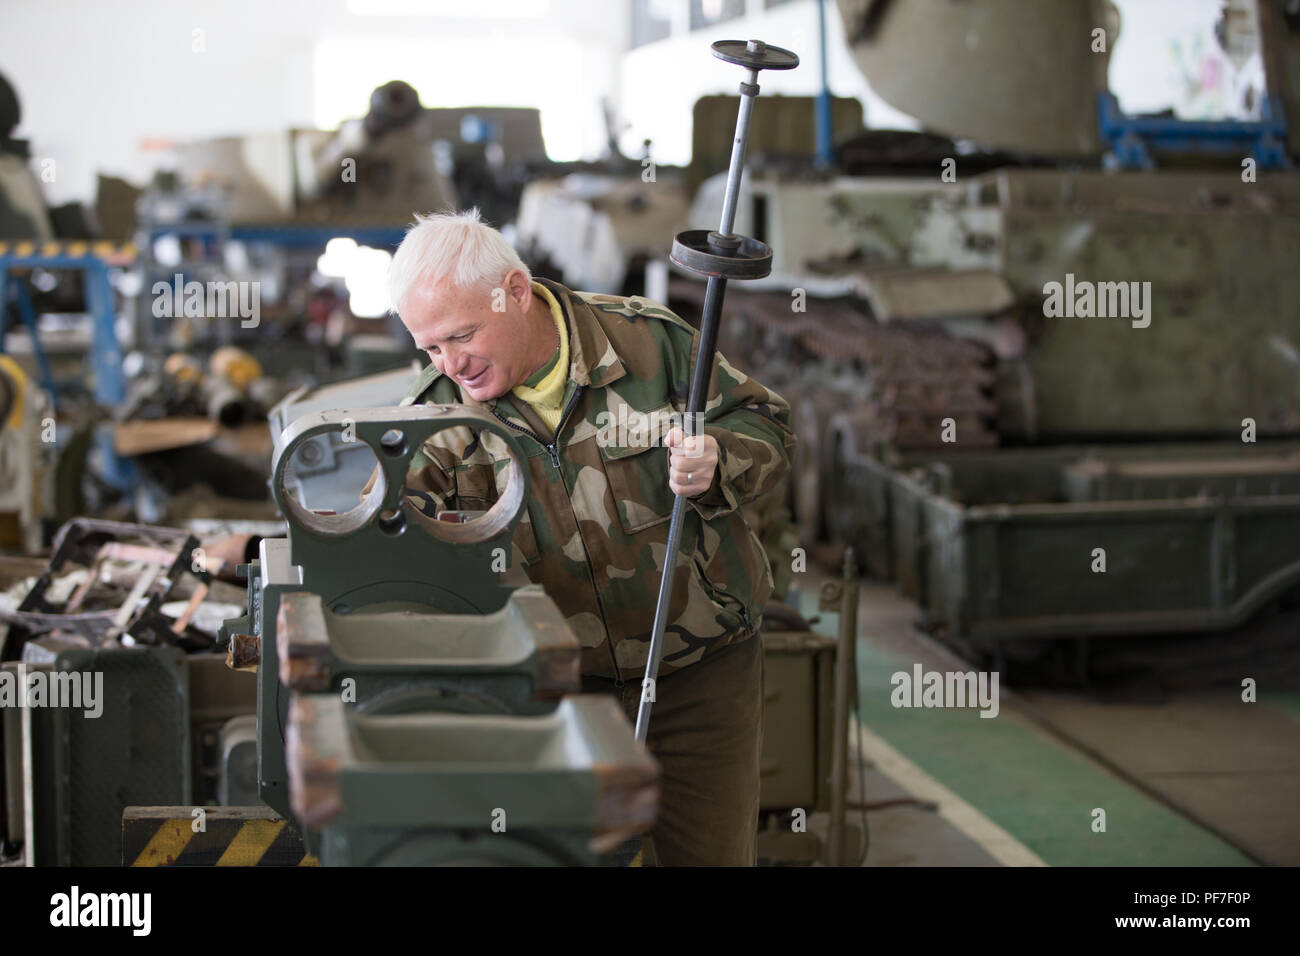 Belarus, Gomil, April 27, 2018. Military factory.Repair of tanks.Maintenance of military equipment. Production of weapons.Warehouse of military equipm Stock Photo